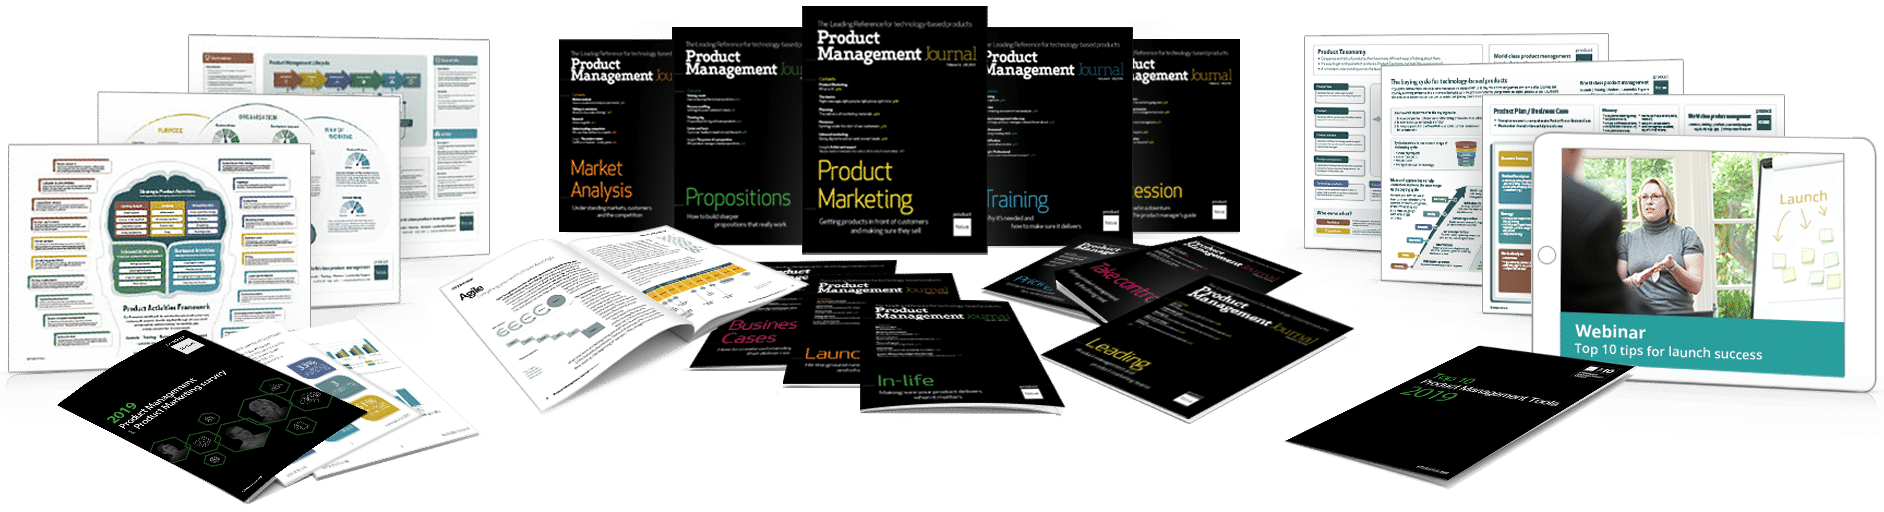 Product Focus product management resources